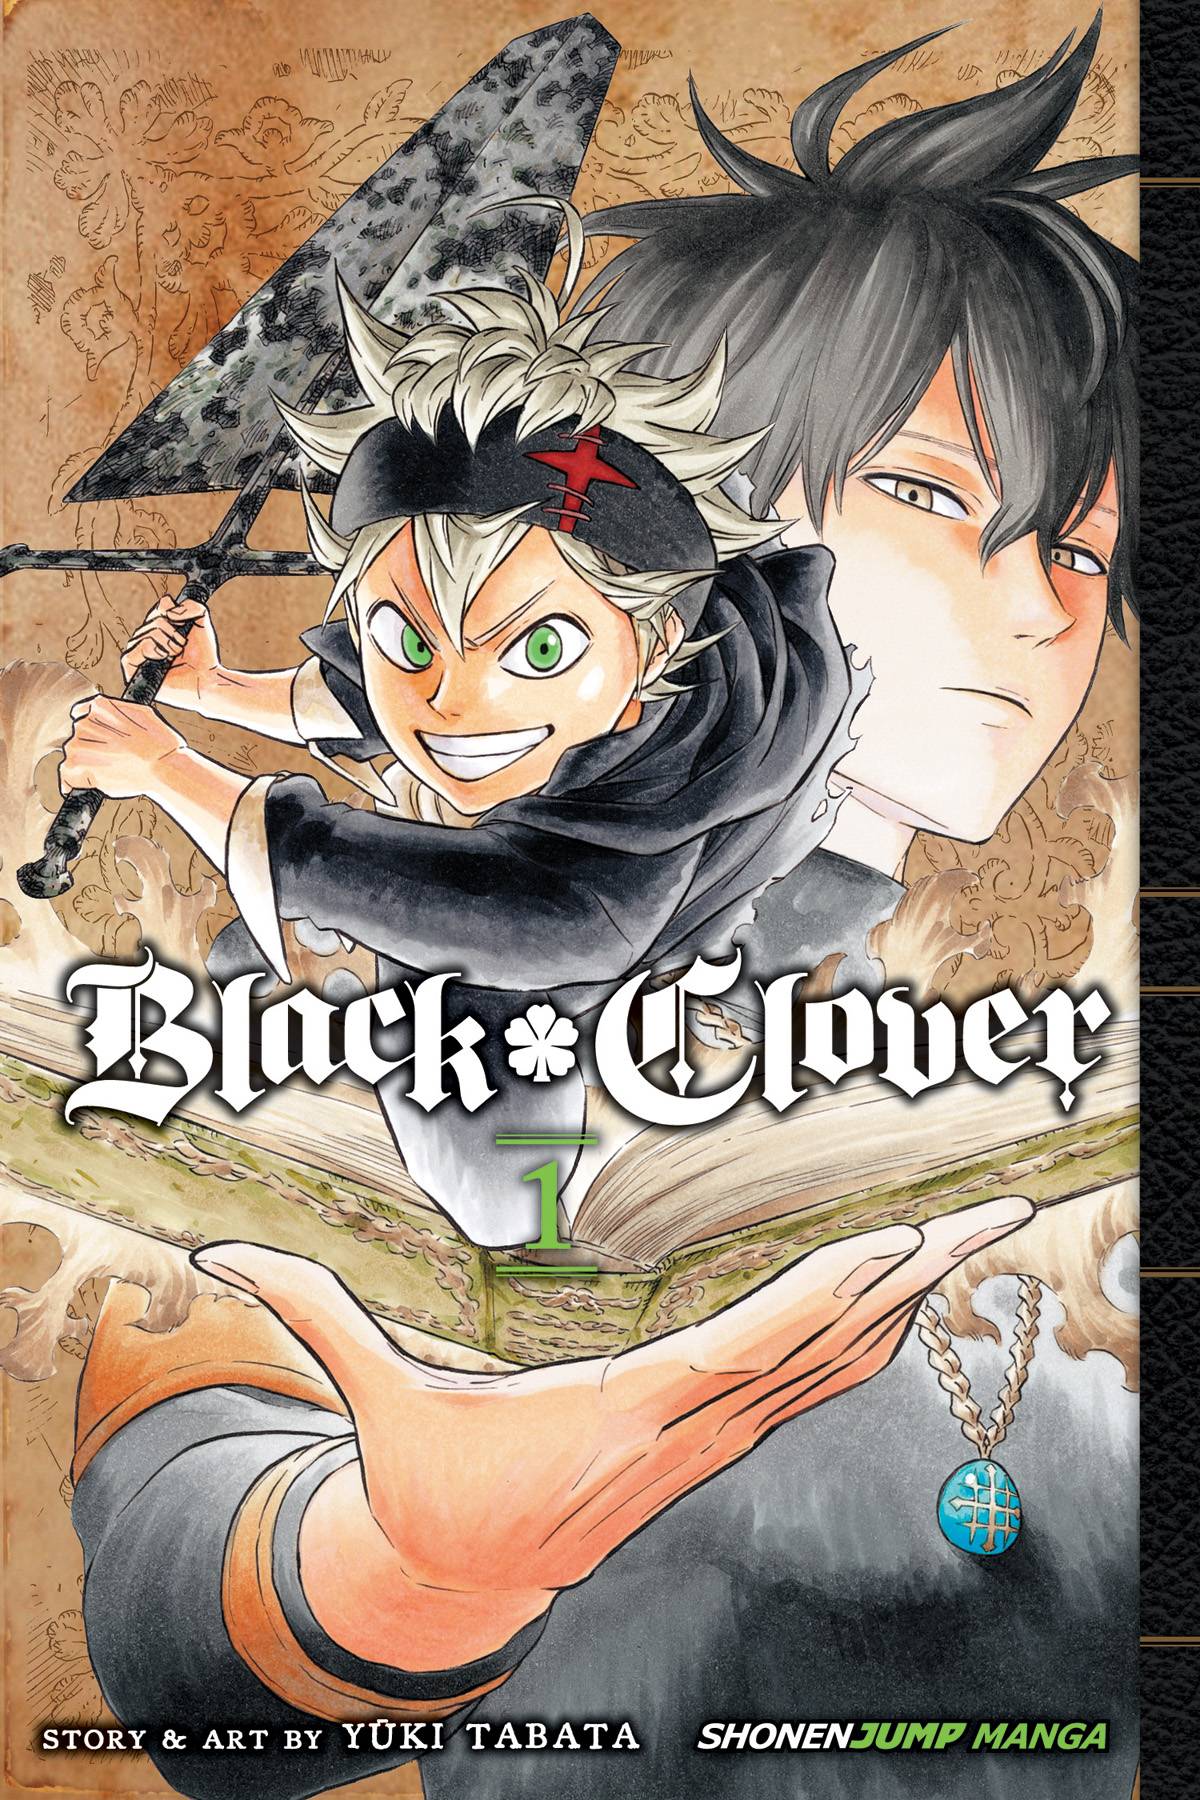 Black Clover Vol. 01